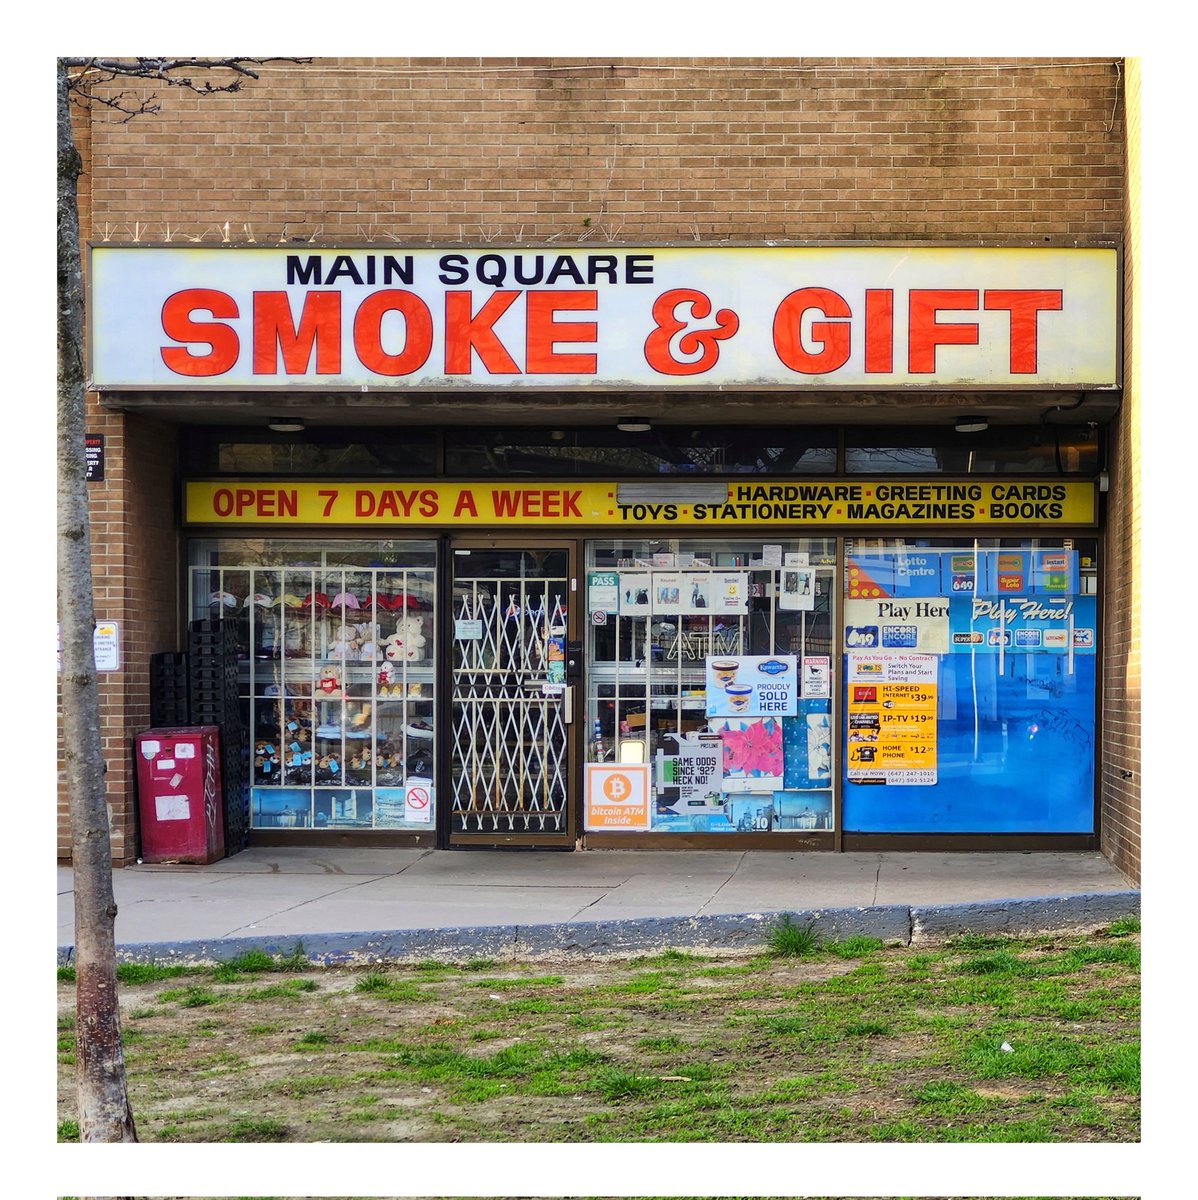 Main Square Smoke & Gift. #Toronto #Danforth #MainSquare #MainStreet #VarietyStore #ConvenienceStore #Depanneur #Photography